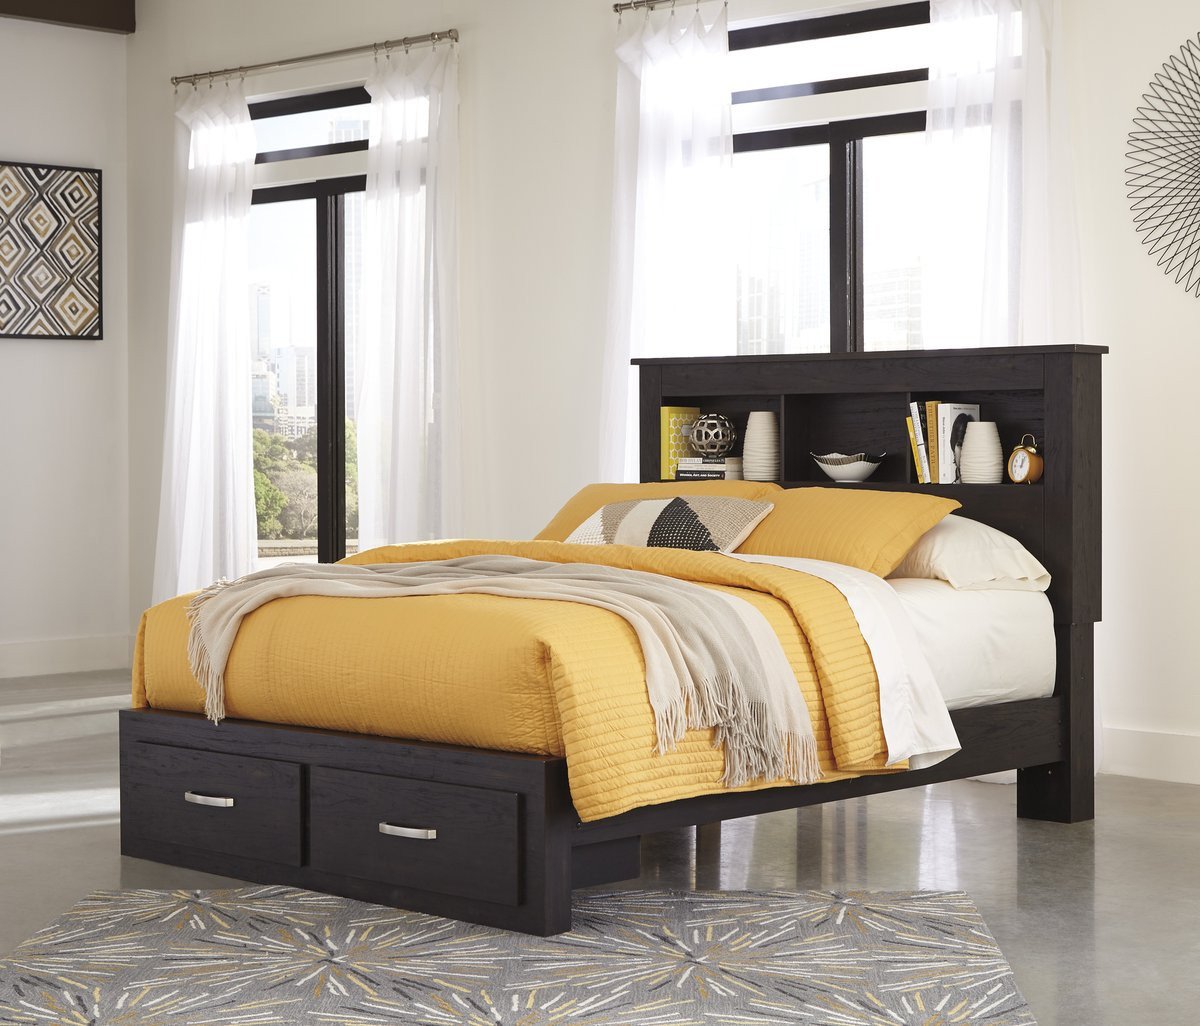 Bedroom Set with Mattress Included Best Of Reylow Dark Brown Bookcase Queen Storage Platform Bed